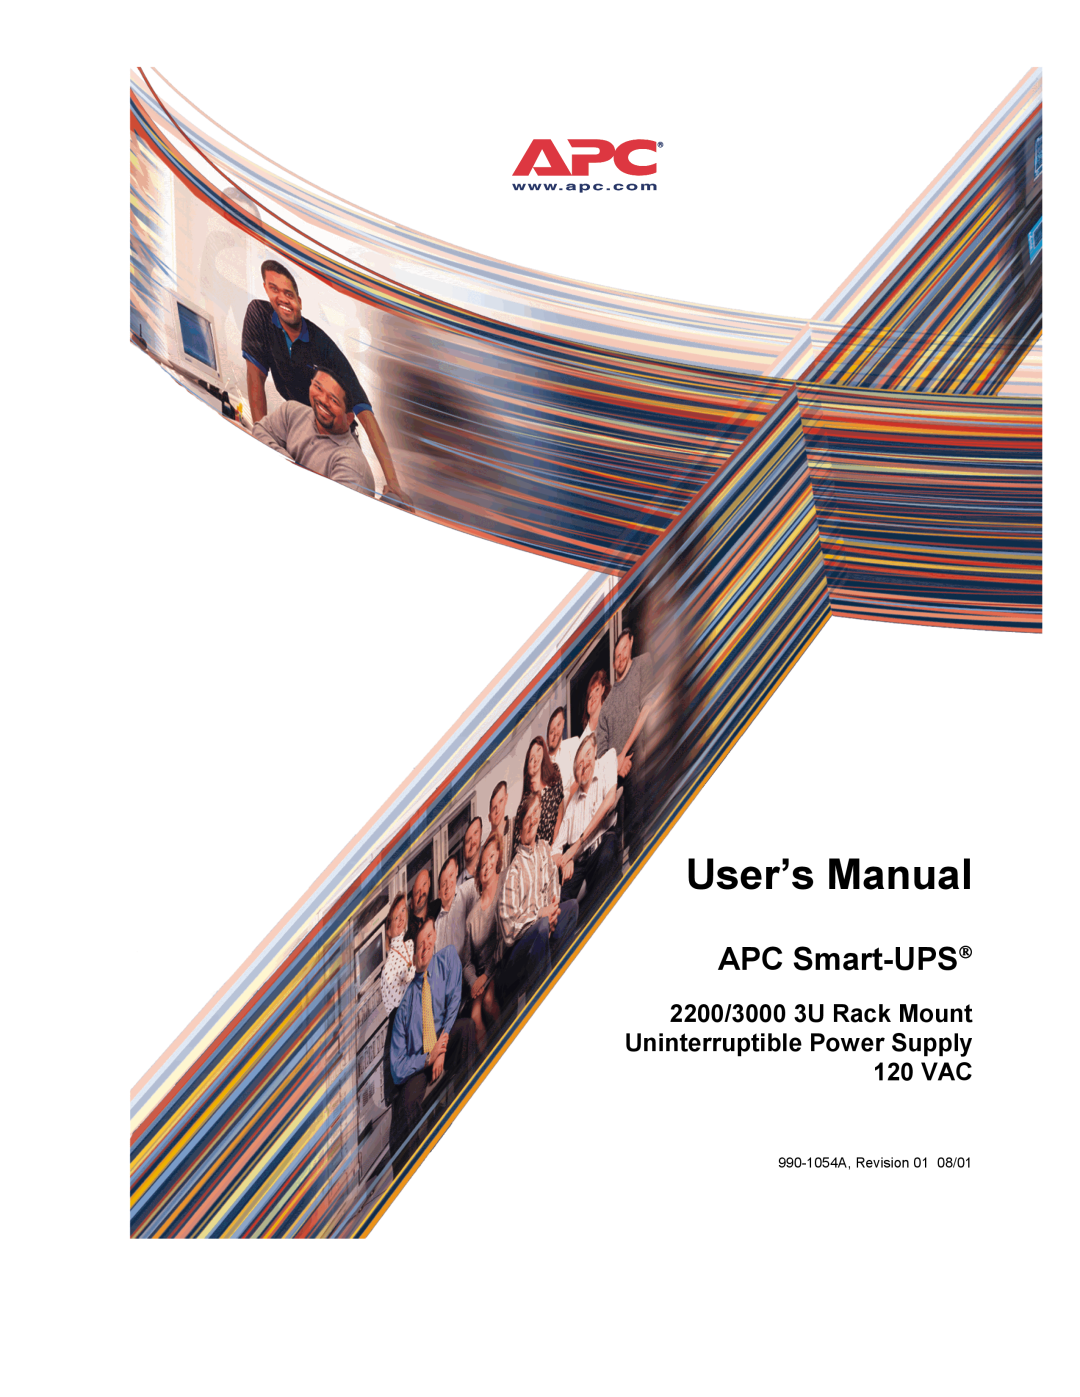 APC user manual User’s Manual, APC Smart-UPS, 2200/3000 3U Rack Mount Uninterruptible Power Supply 120 VAC 